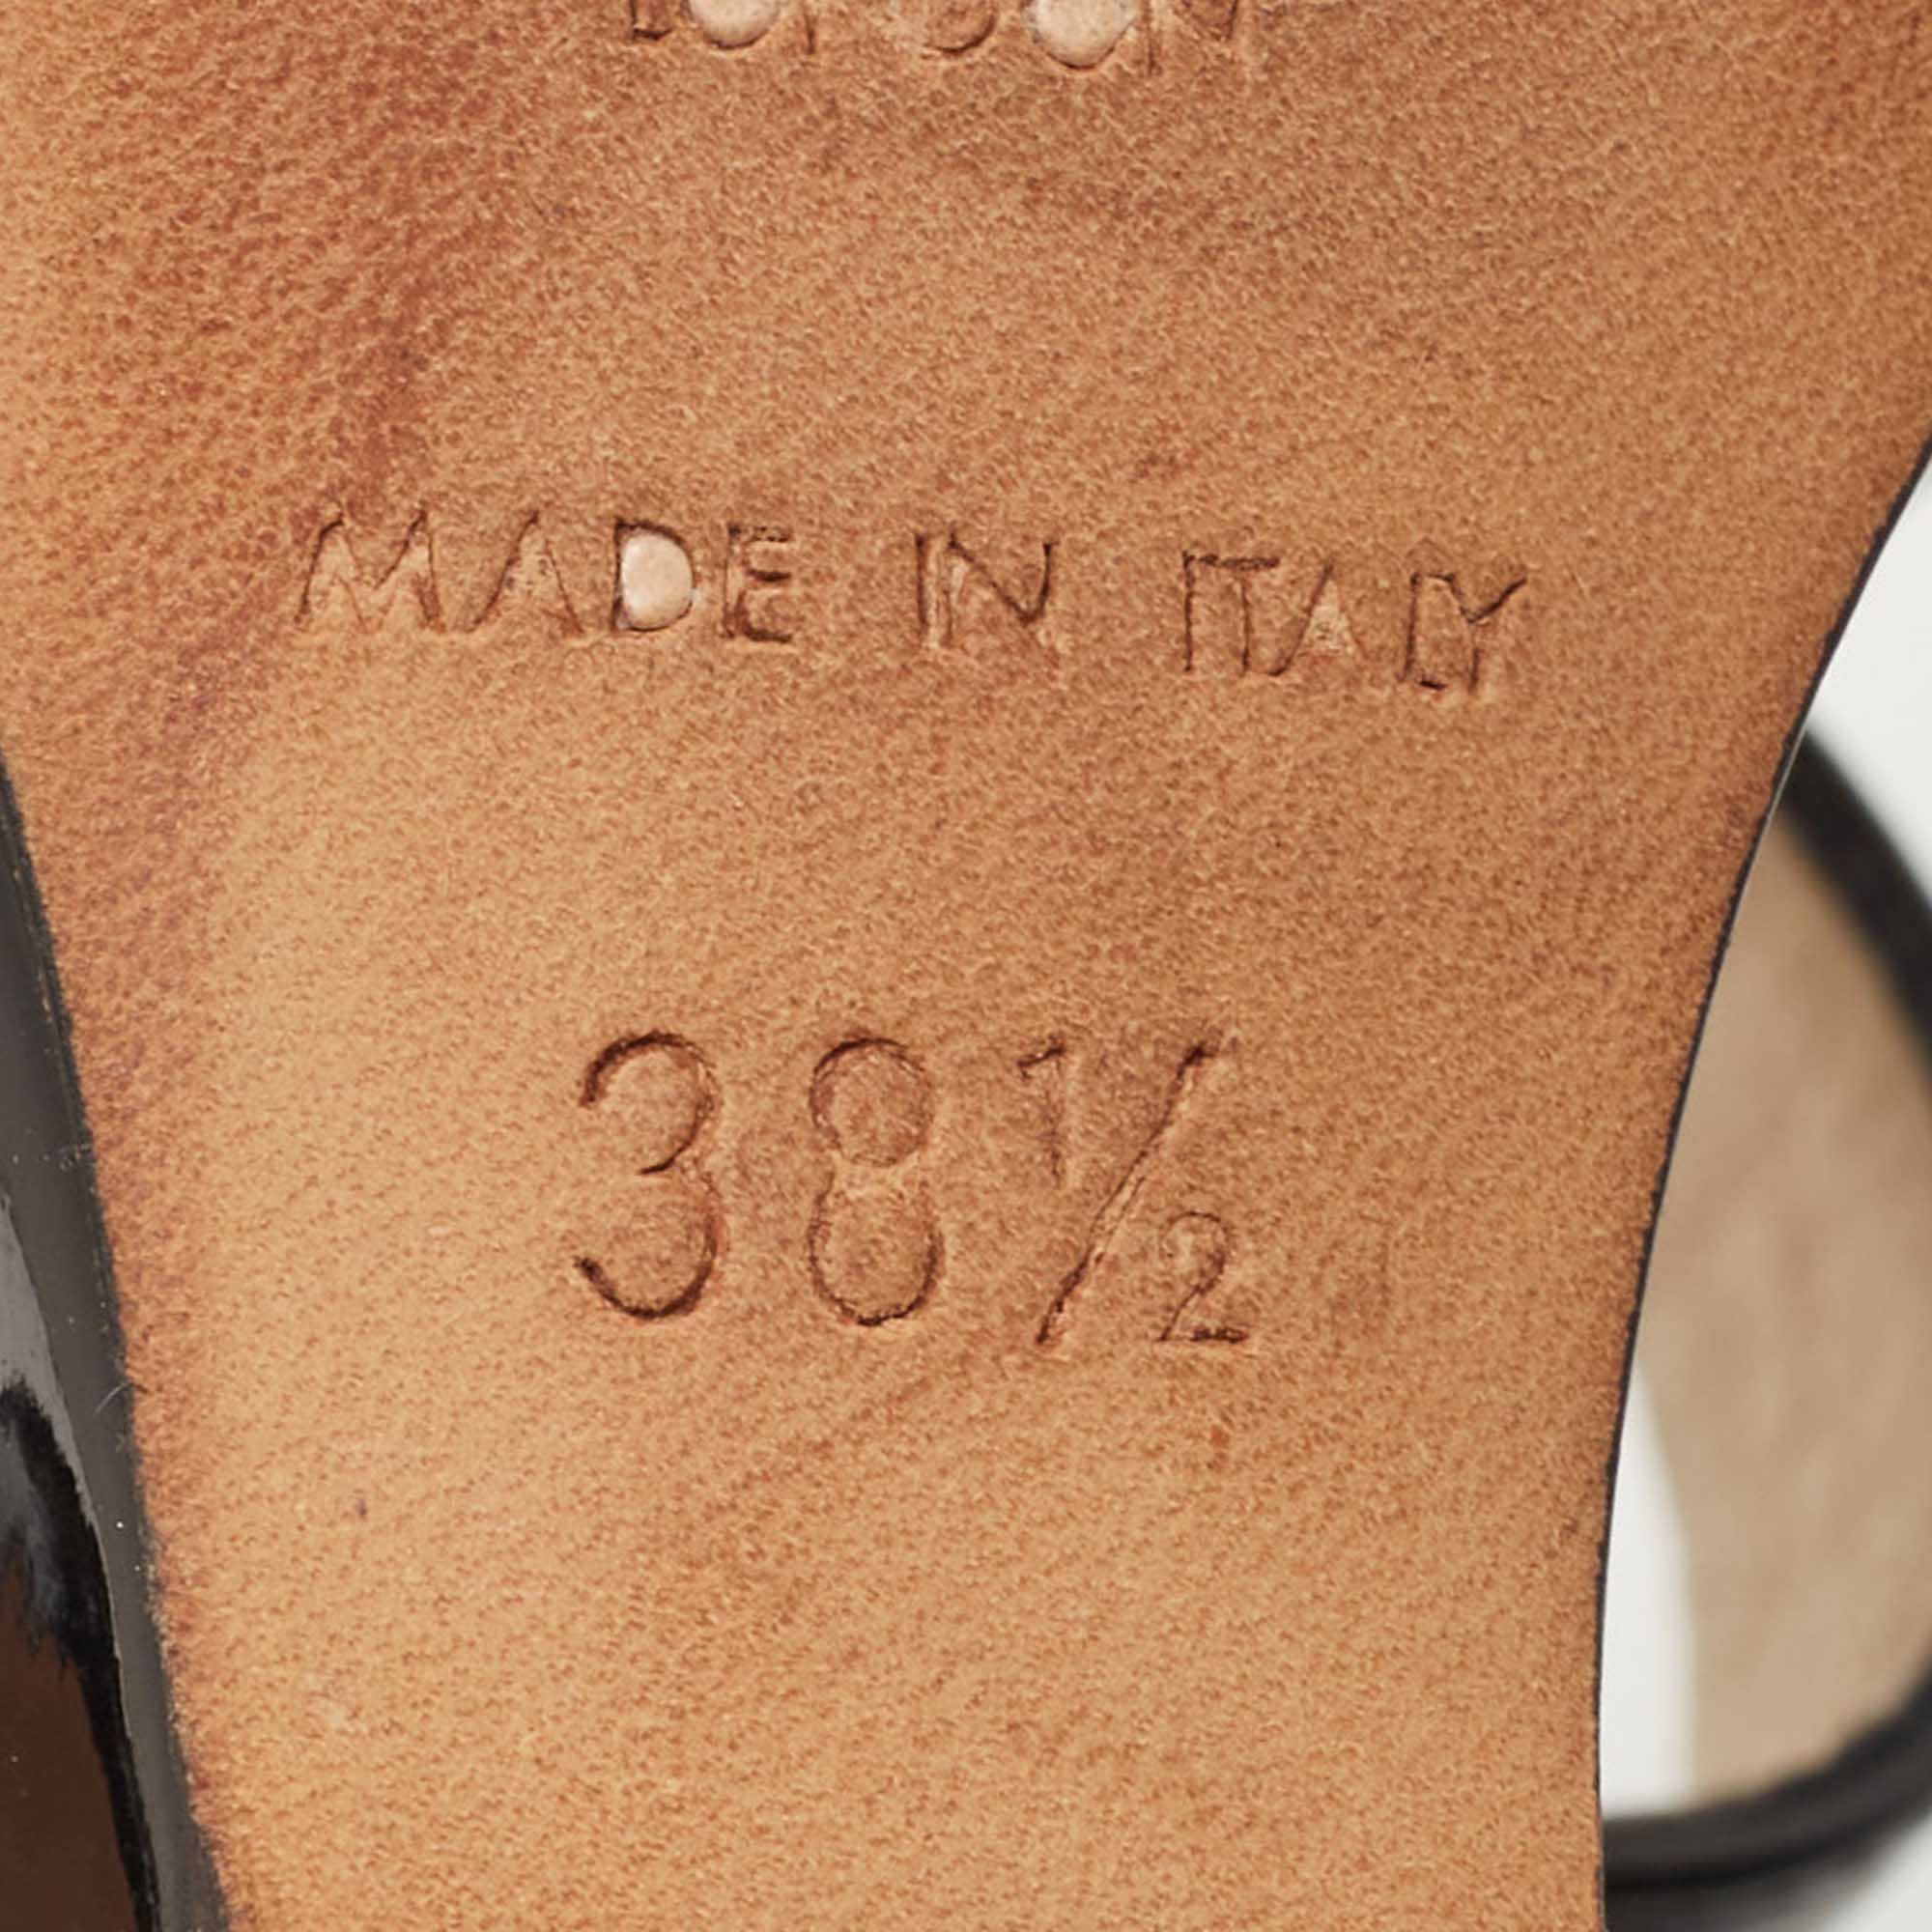 Jimmy Choo Black Patent Leather Wedge Platform Ankle Wrap Sandals Size 38.5